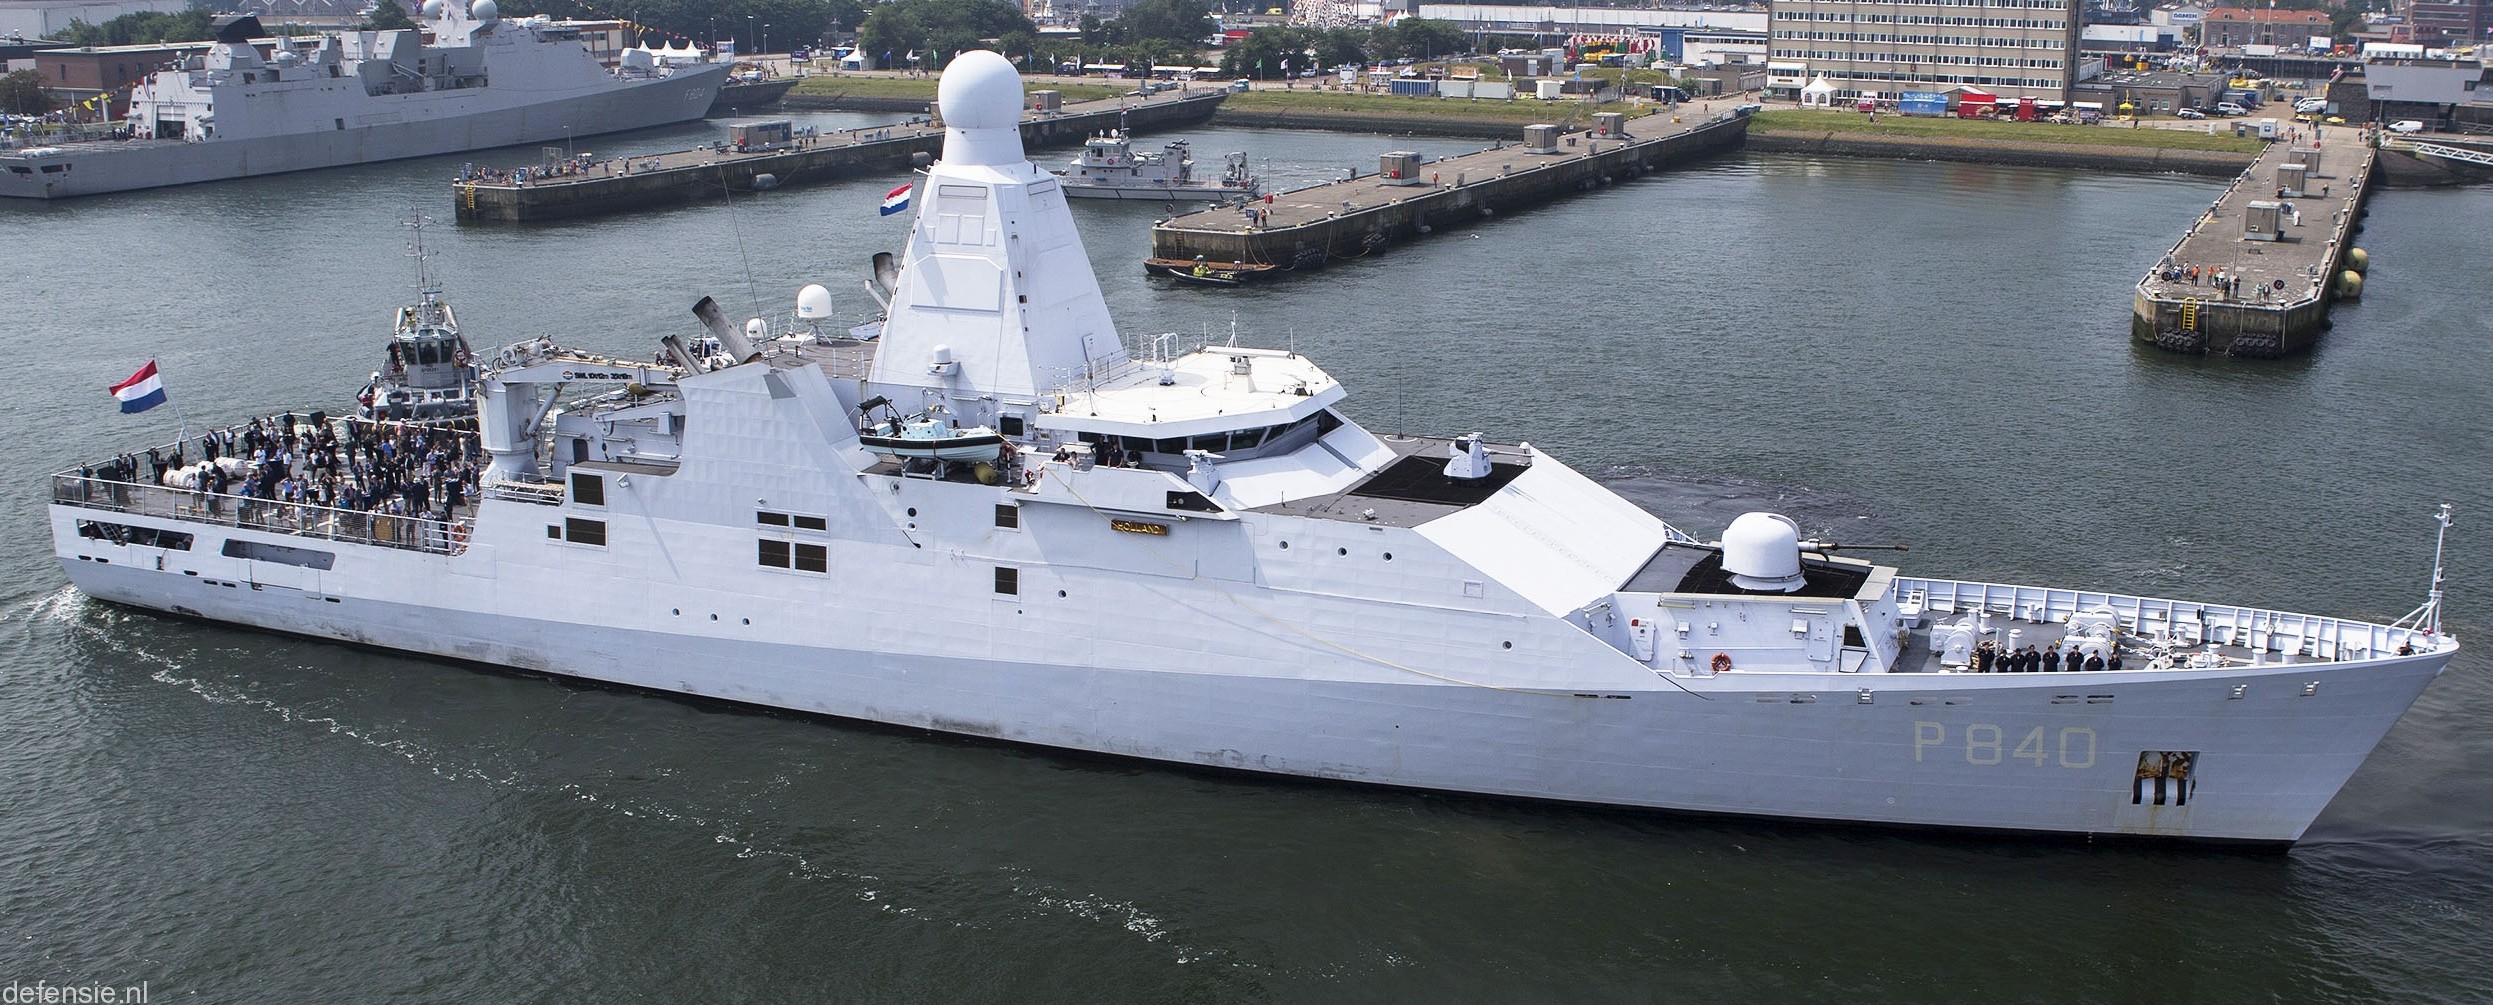 p-840 hnlms holland offshore patrol vessel opv royal netherlands navy 23